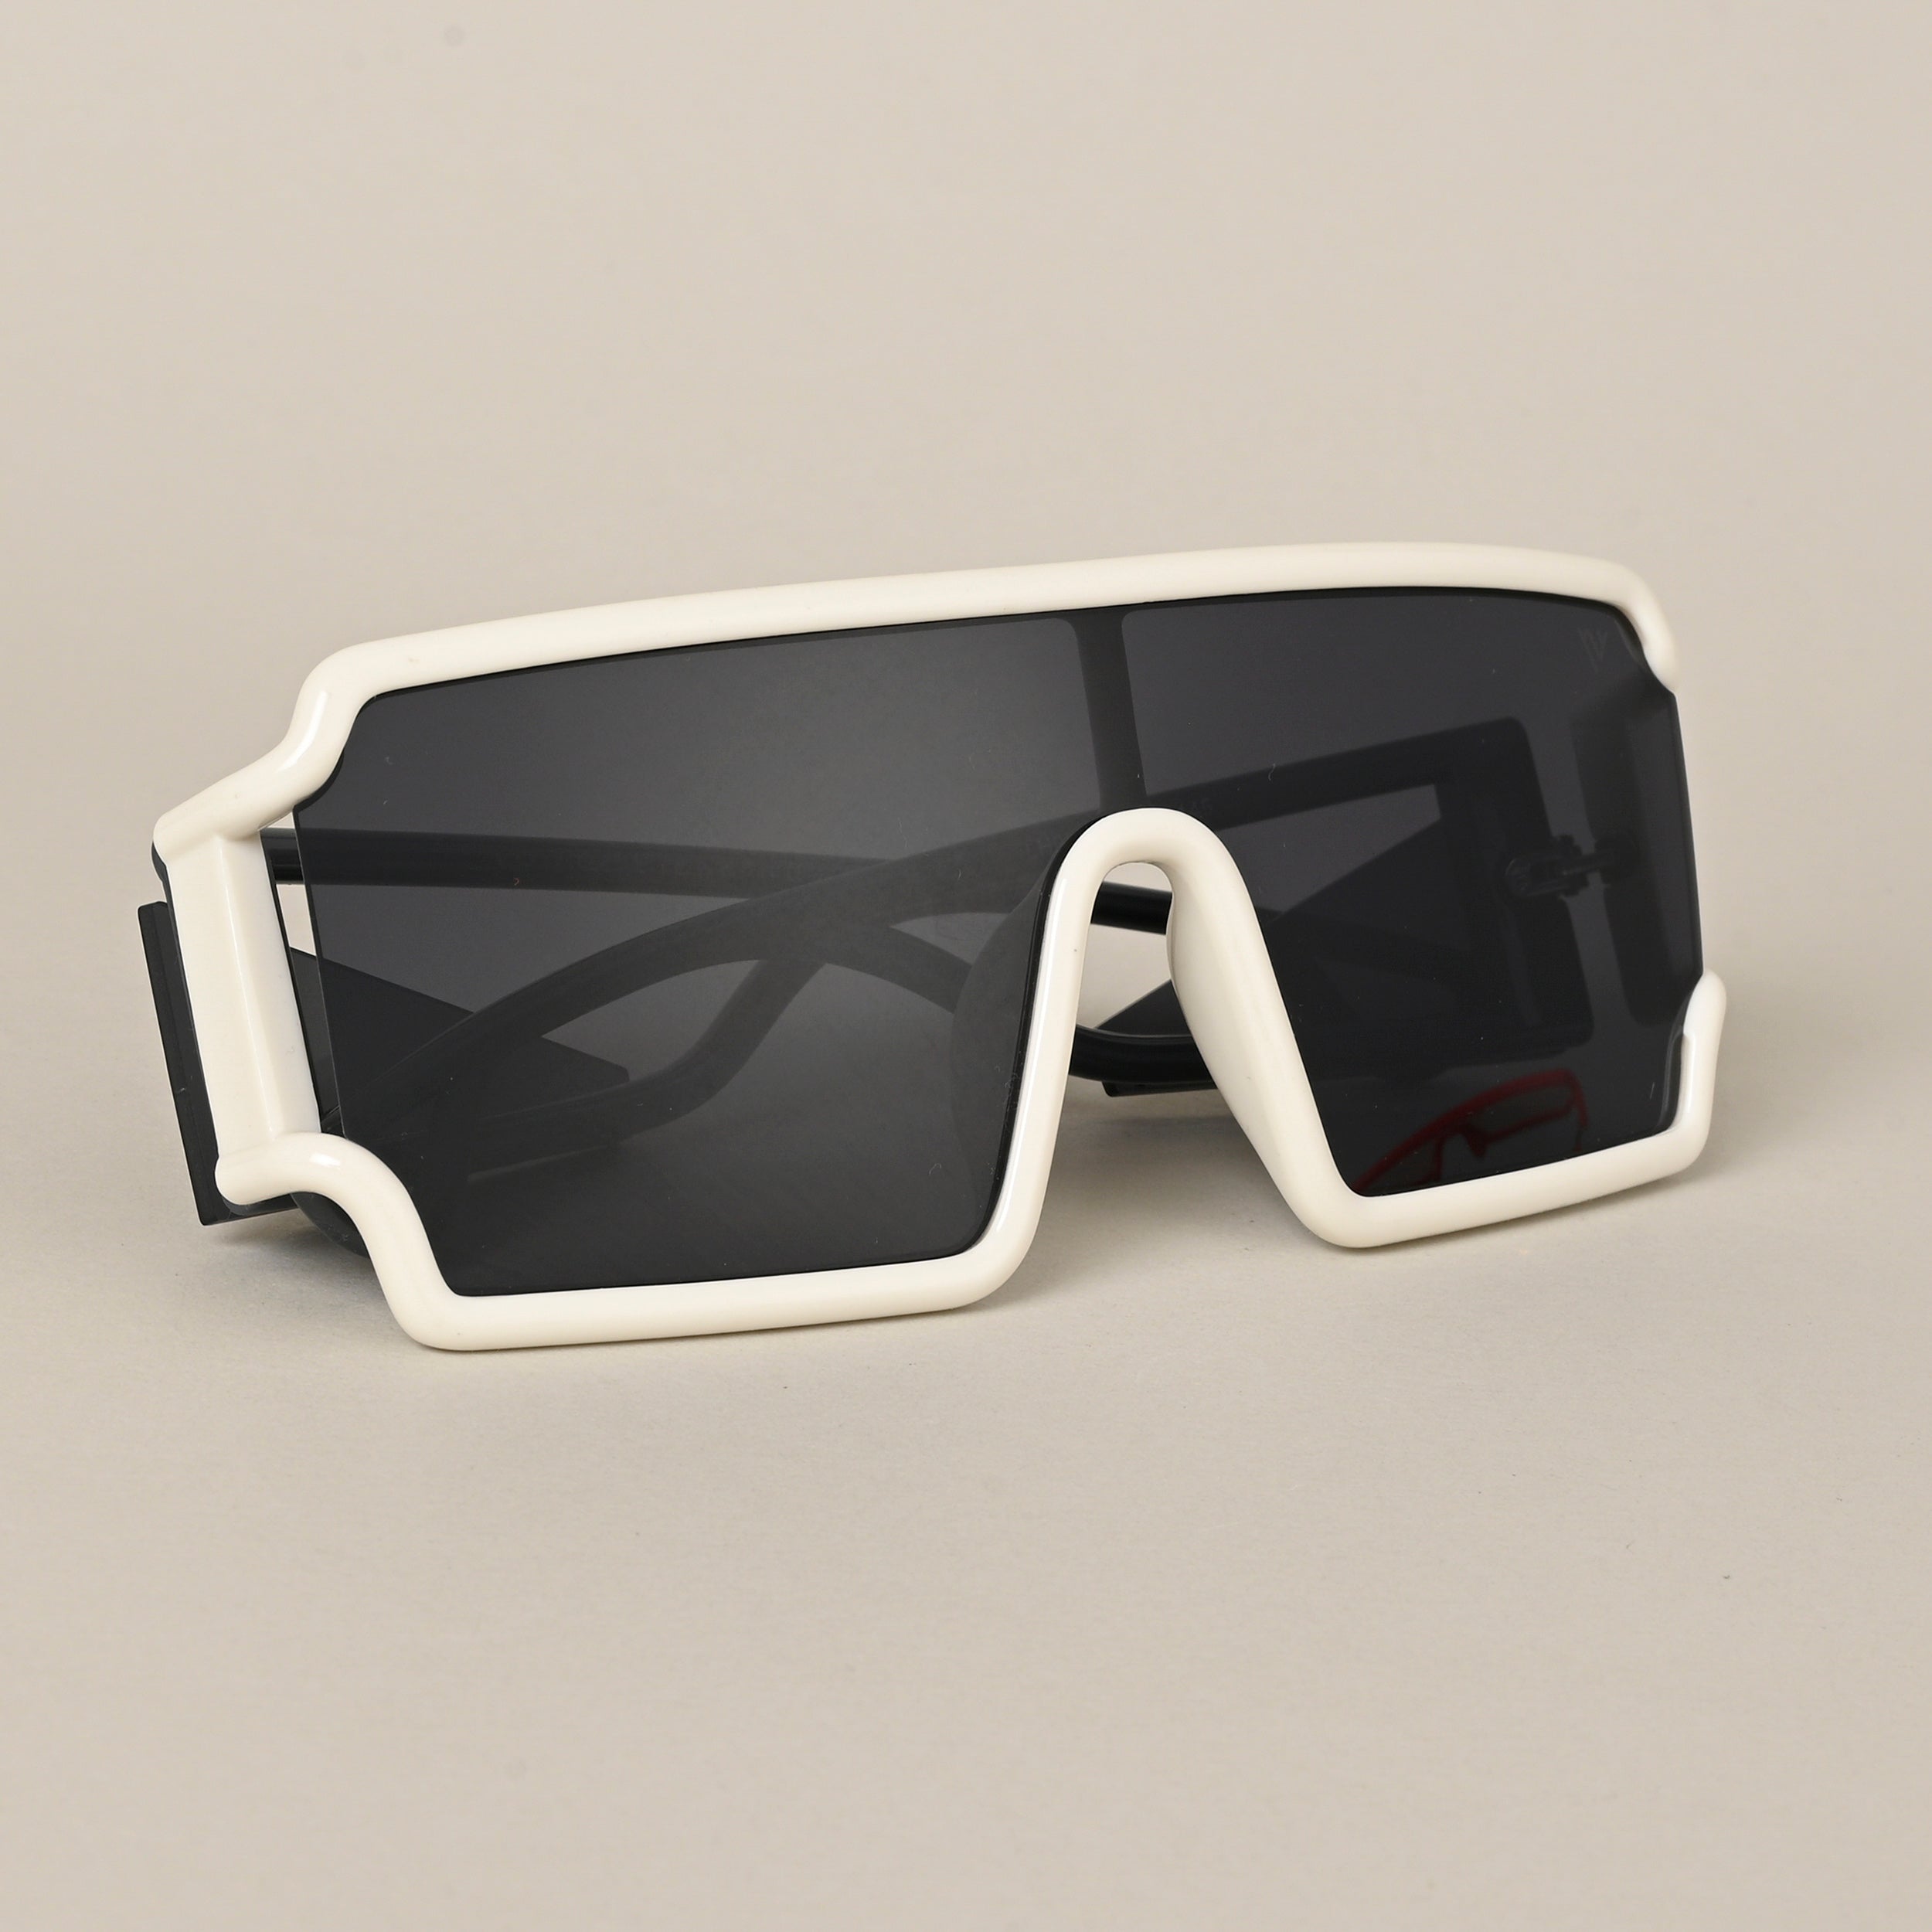 Voyage White Wayfarer Sunglasses for Men & Women - MG4565